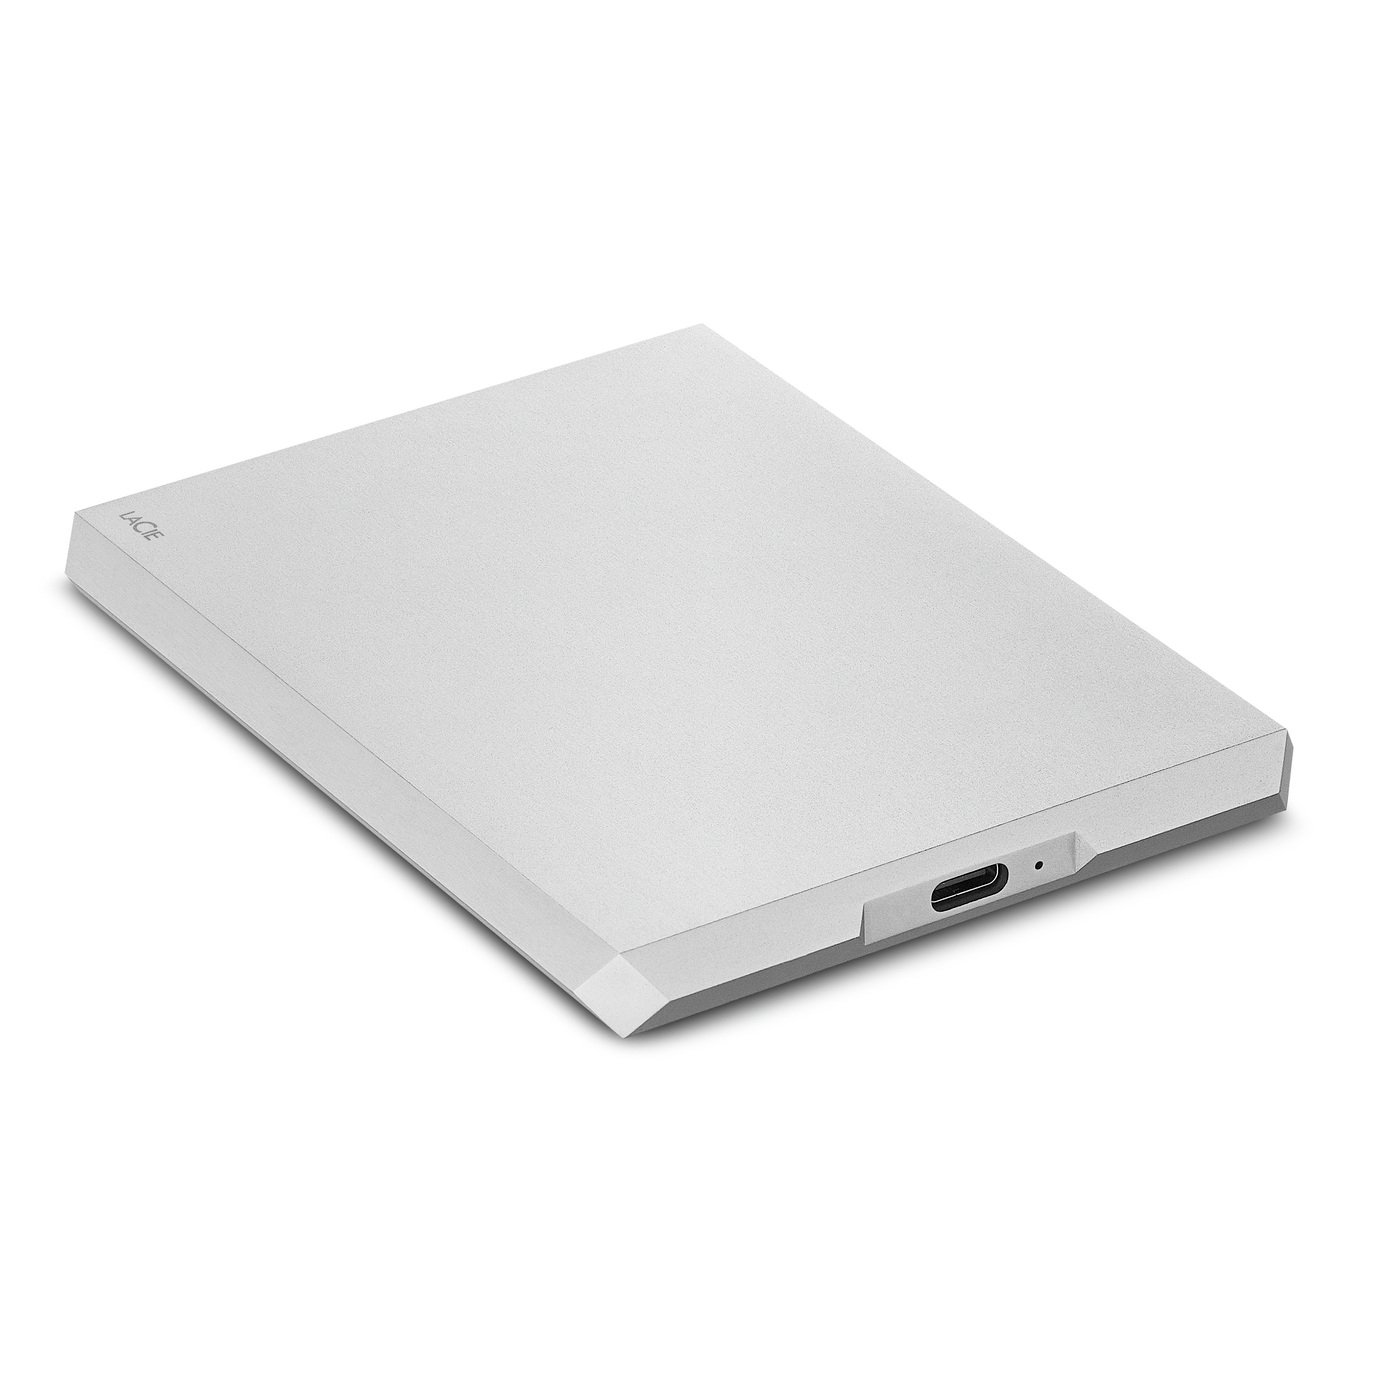 Lacie 2TB Portable Hard Drive Review